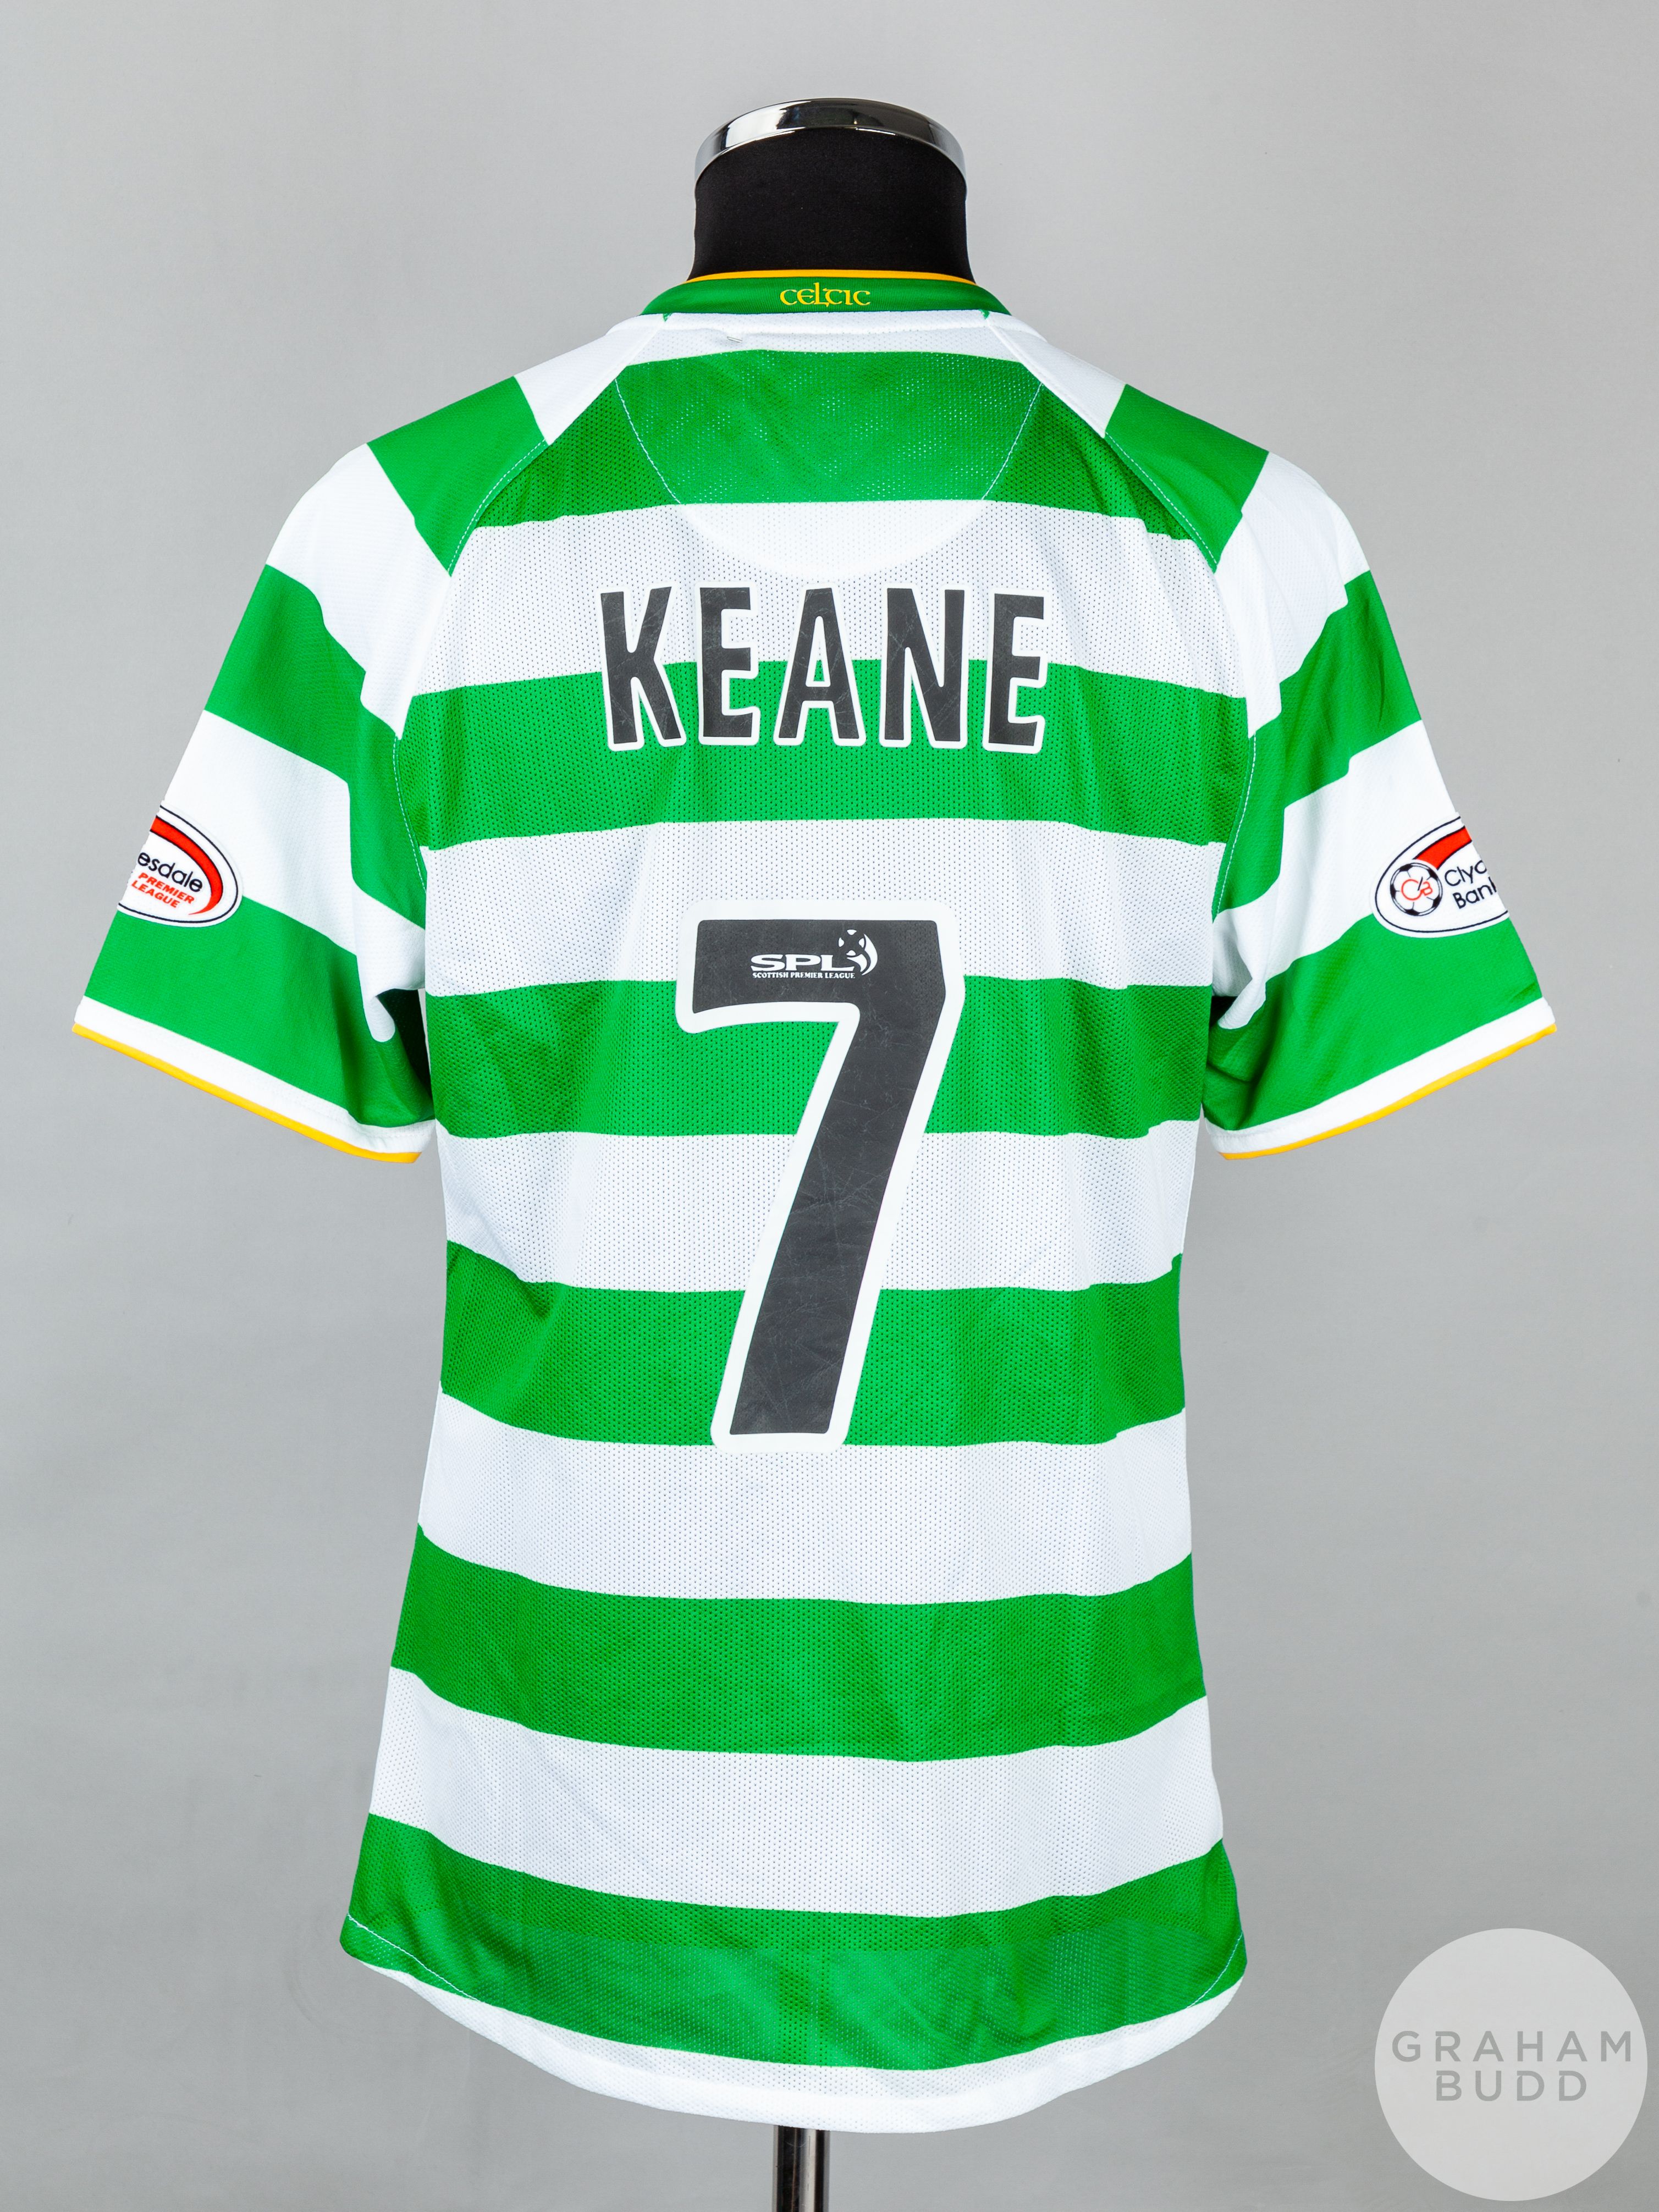 Robbie Keane green and white No.7 Celtic v. Aberdeen short-sleeved shirt - Image 2 of 5